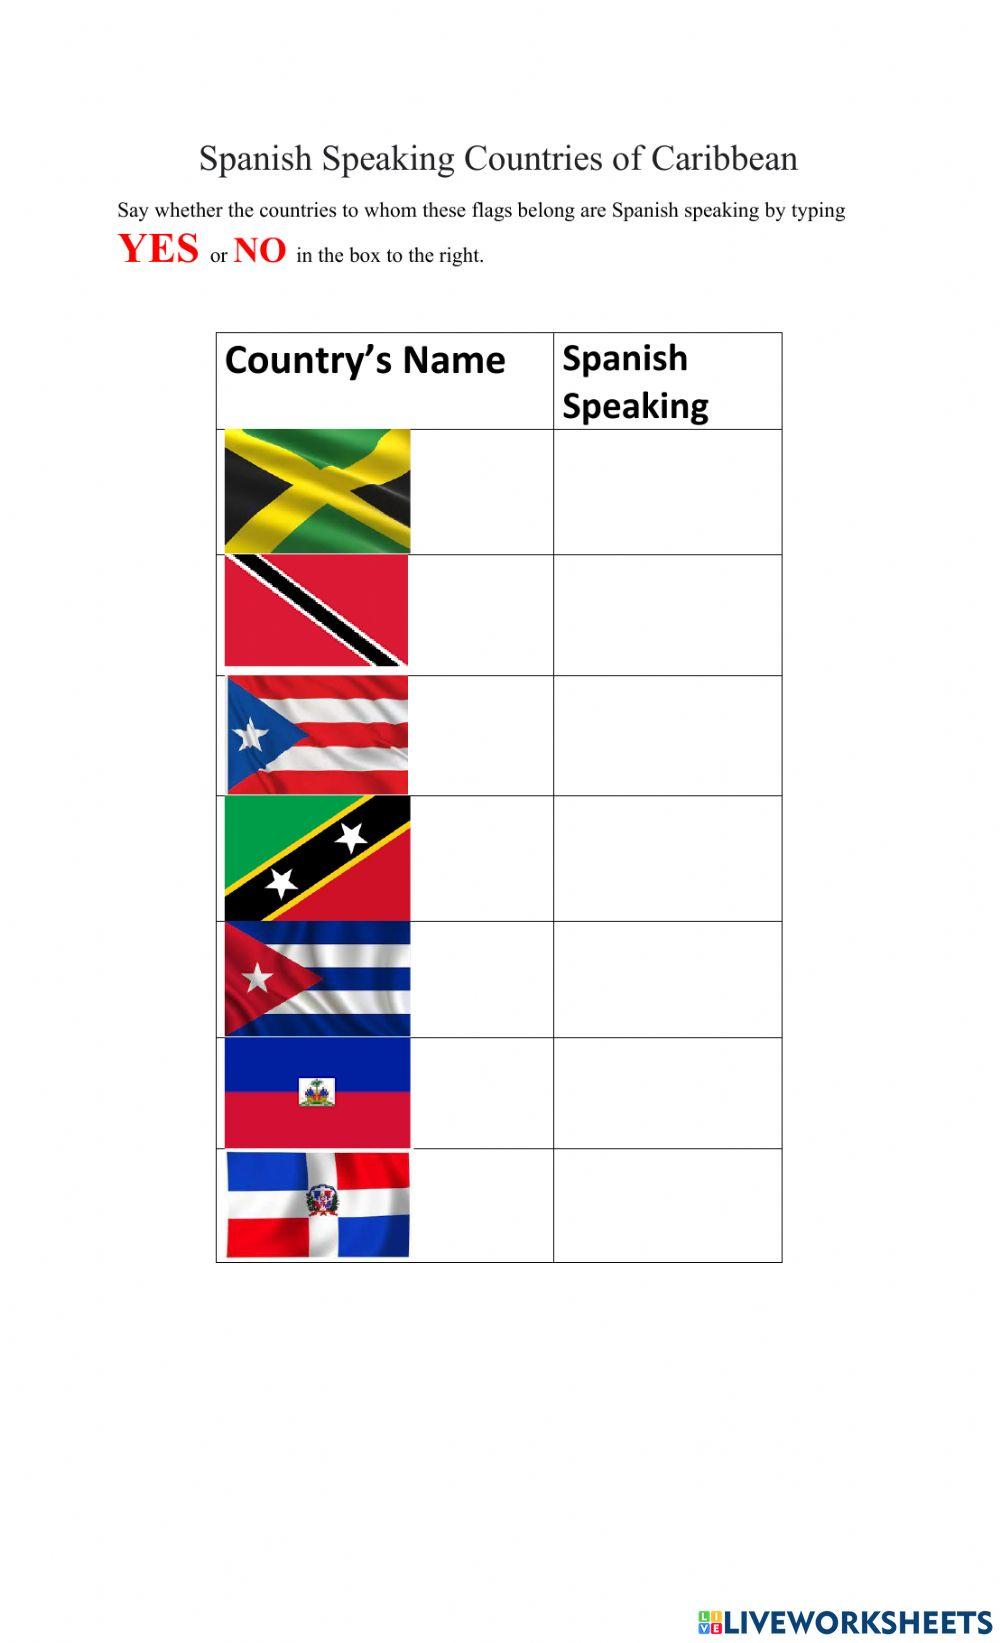 Spanish Speaking Caribbean Countries